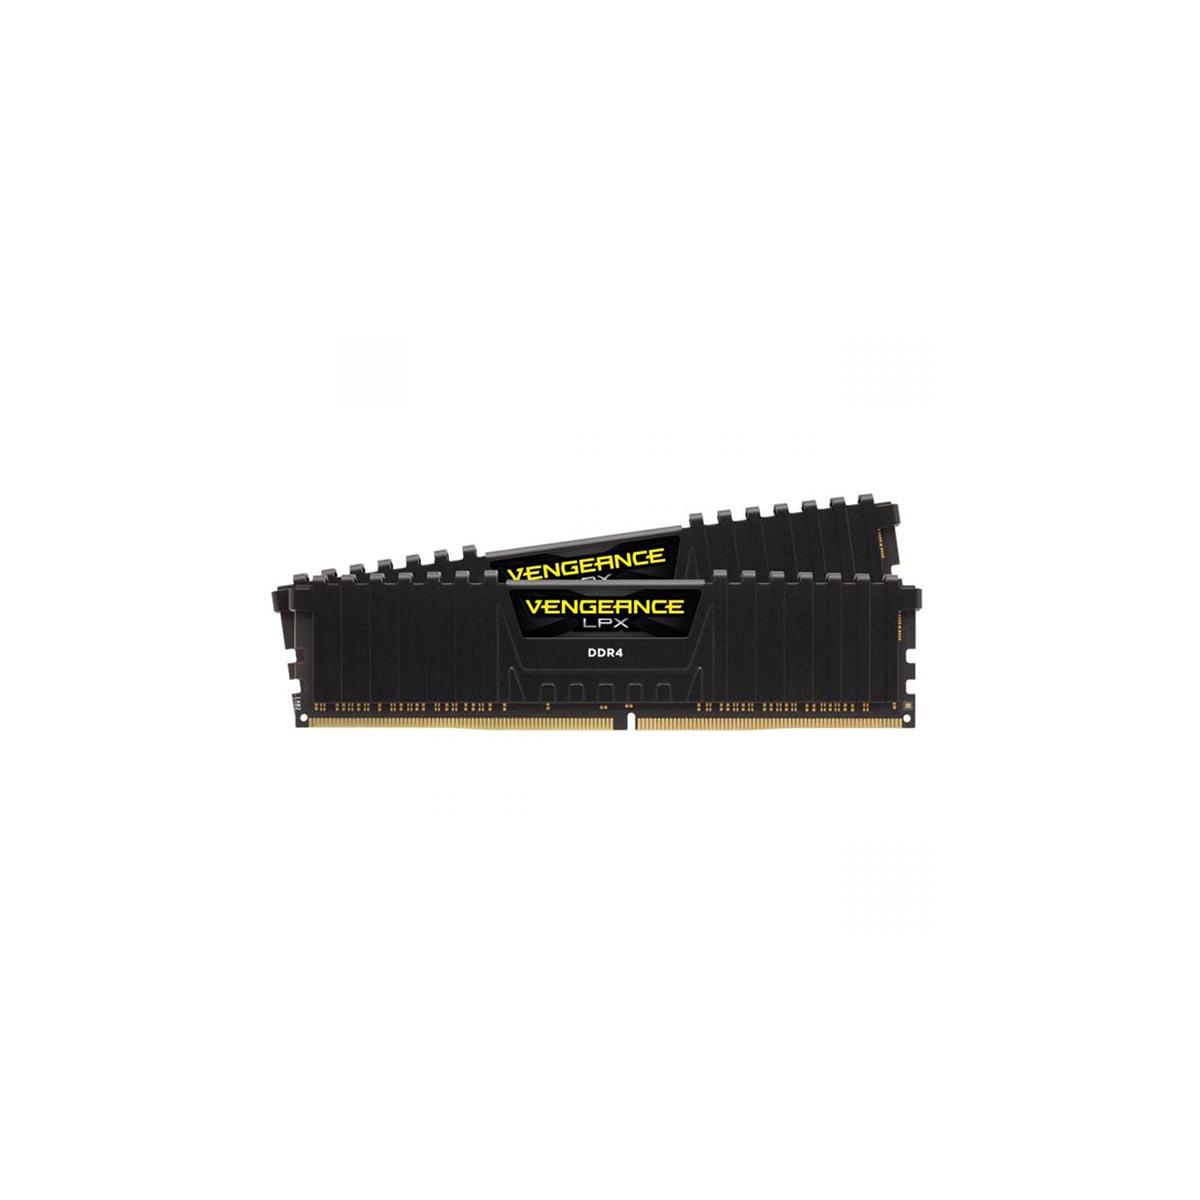 MEMORIA DIMM DDR4 CORSAIR (CMK16GX4M2D3000C16) 16GB 3000MHZ (2X8GB) VENGEANCE LPX, NEGRO - CORSAIR